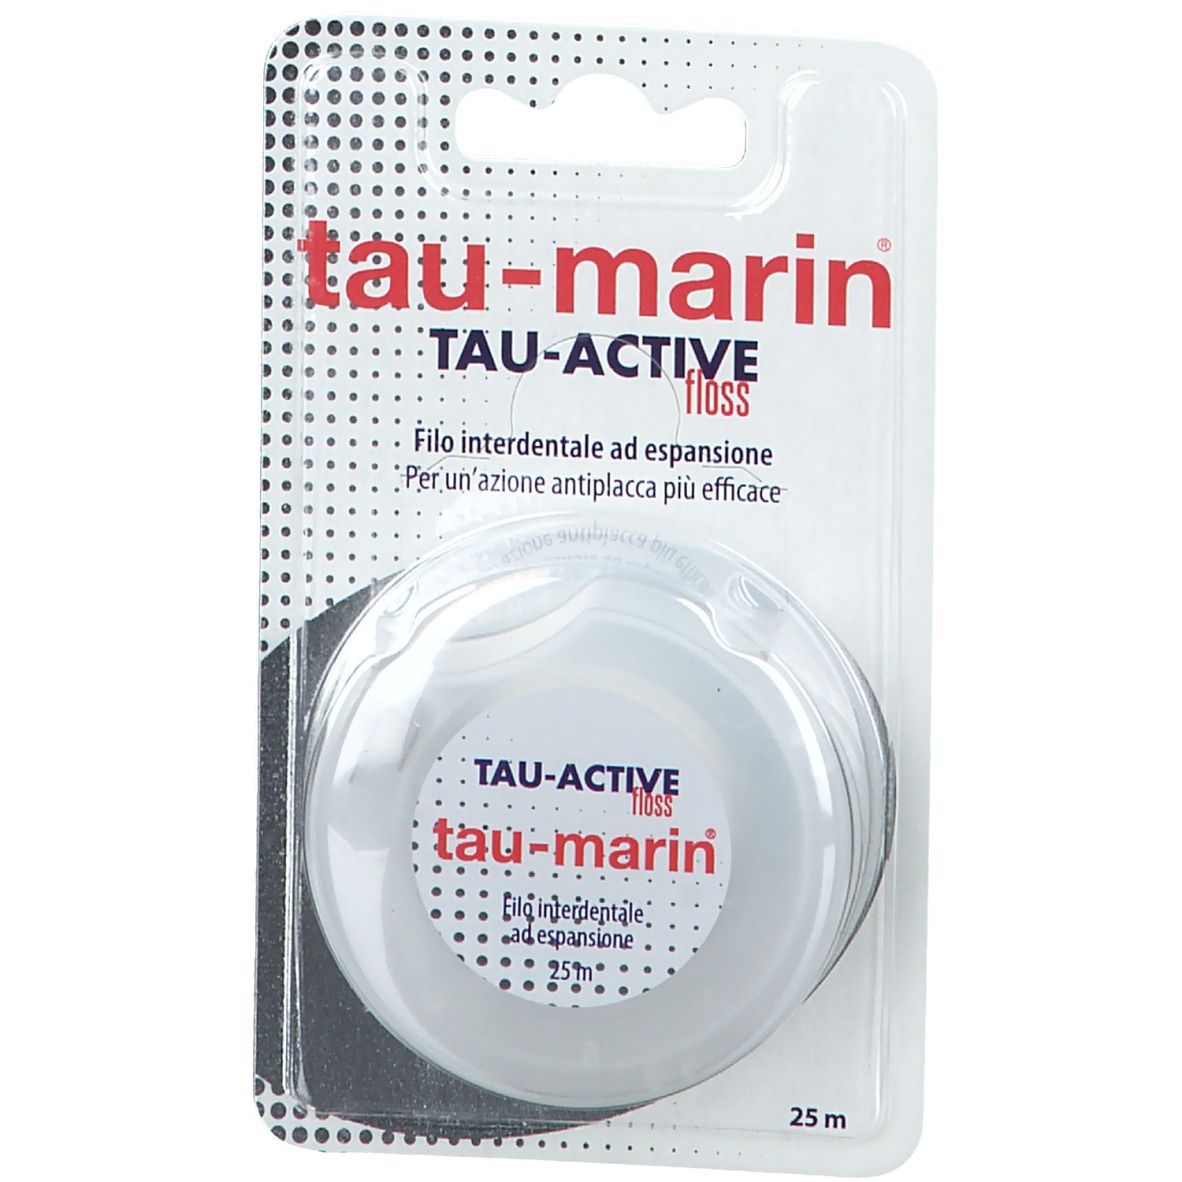 tau-marin® TAU-ACTIVE Floss